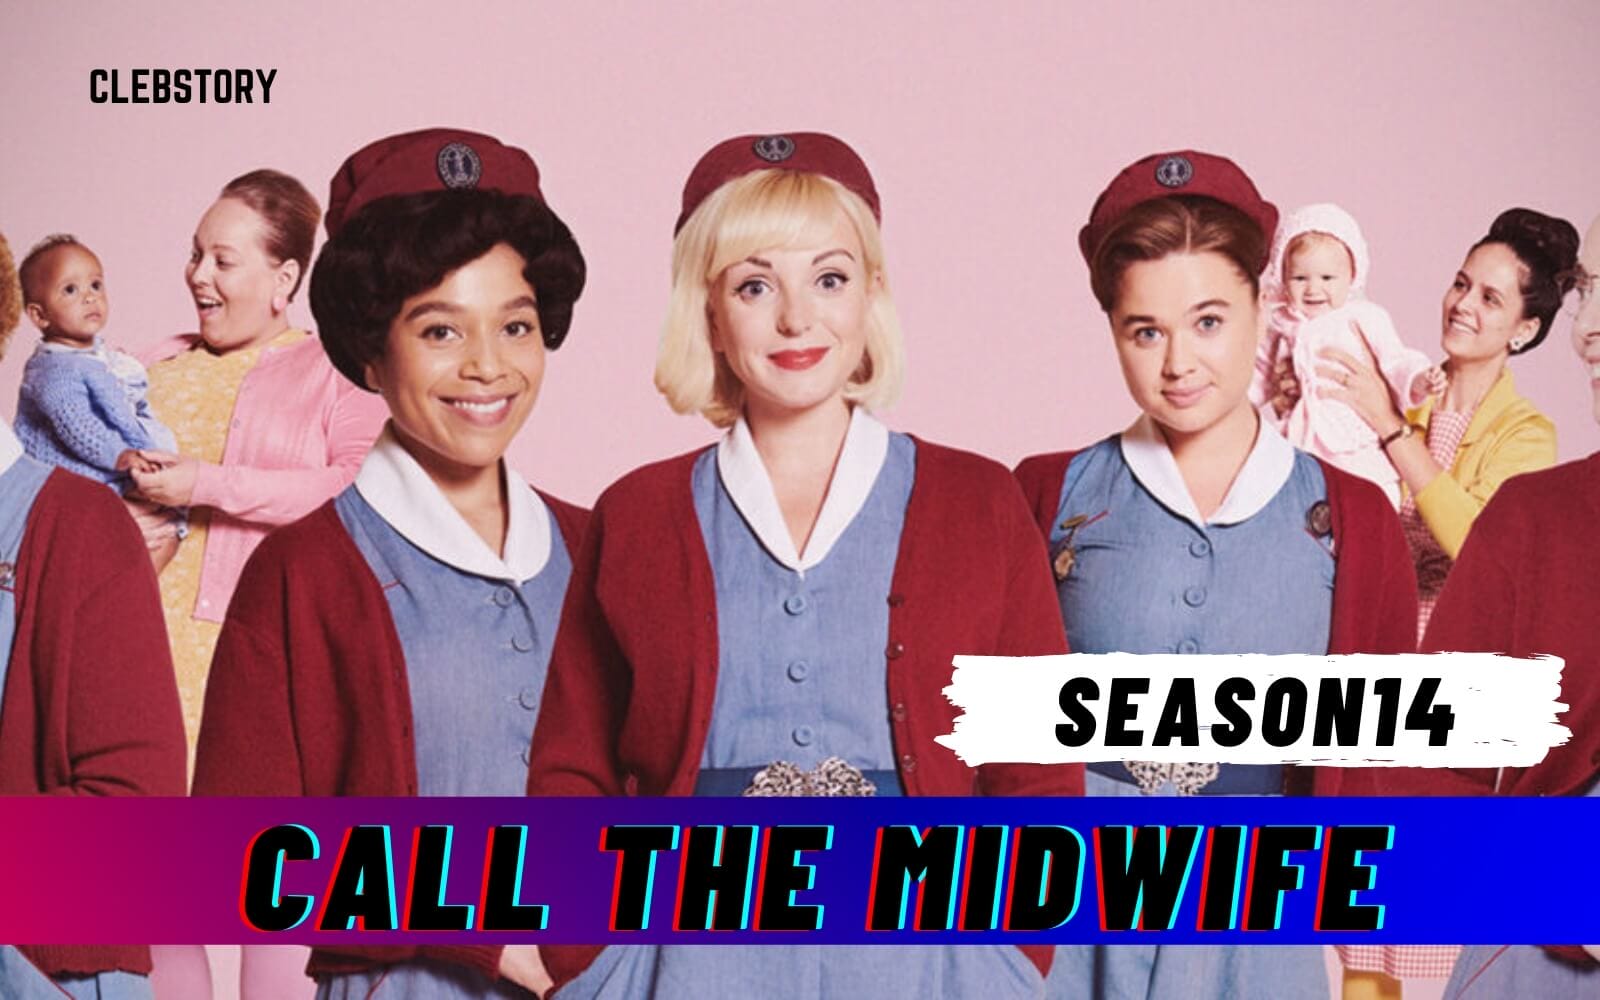 Call the Midwife season 14